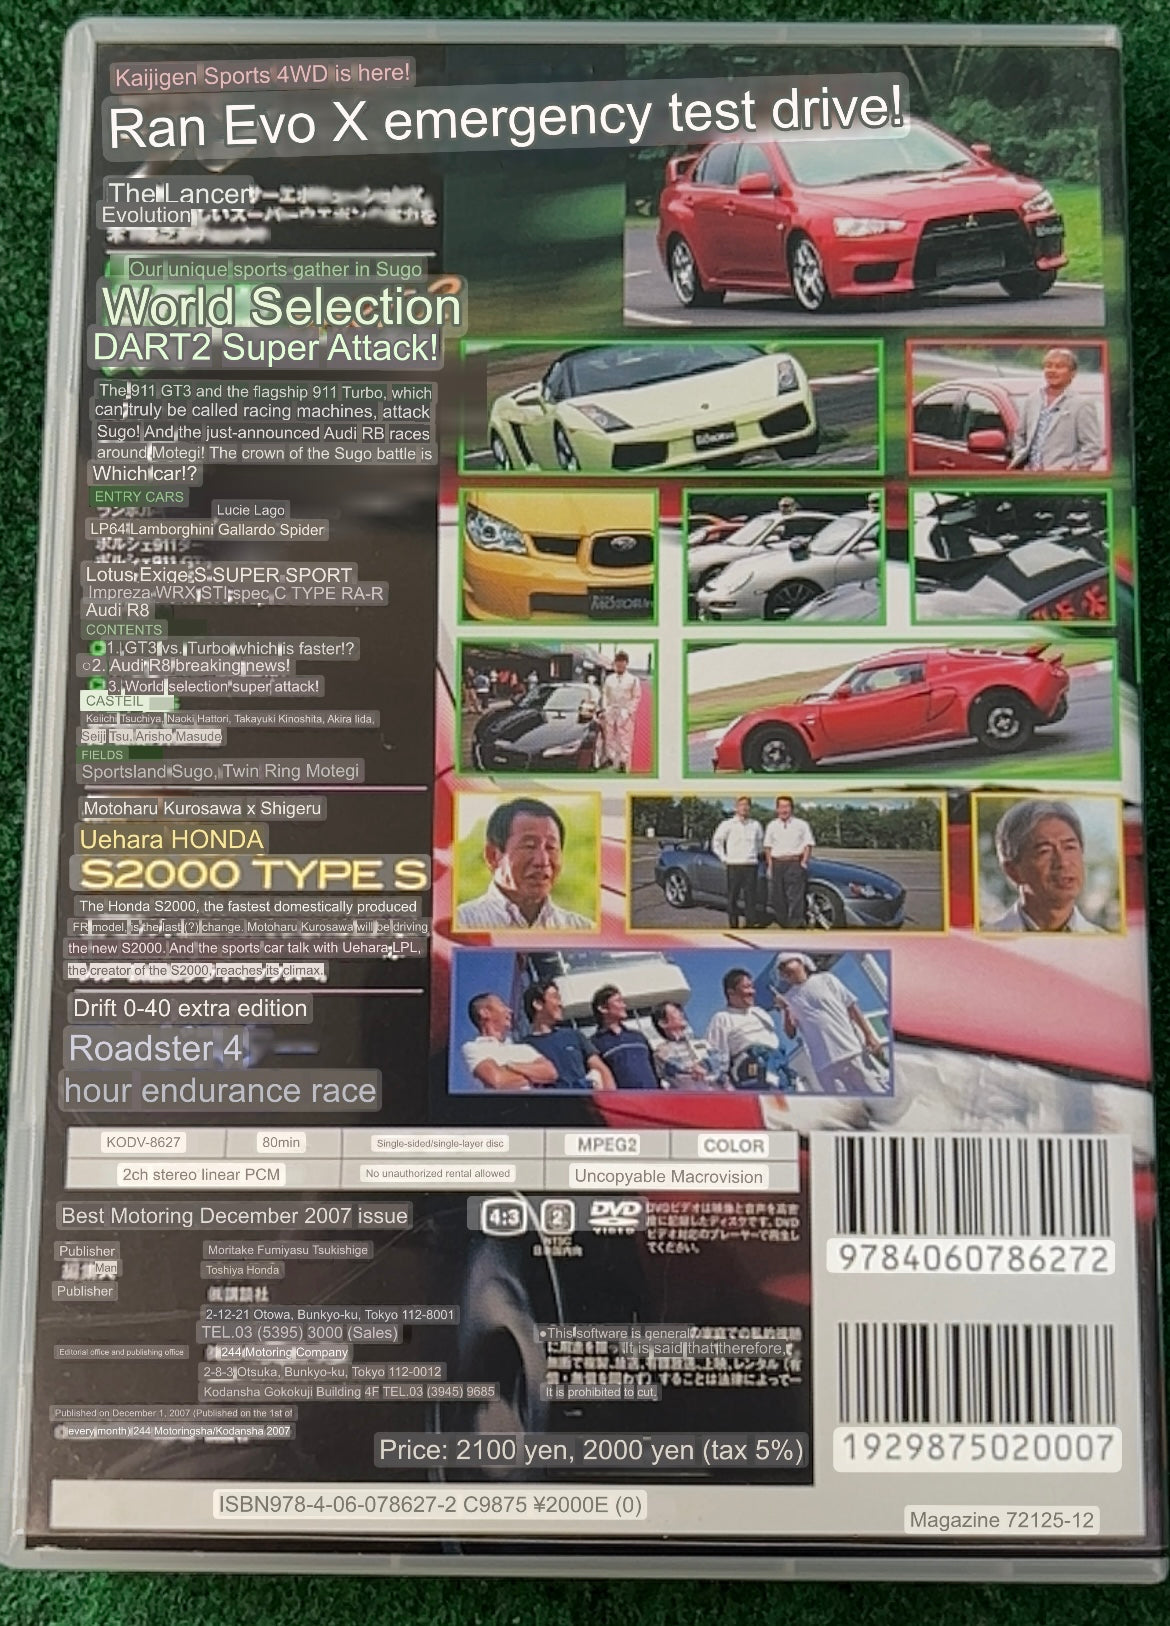 Best Motoring DVD - December 2007